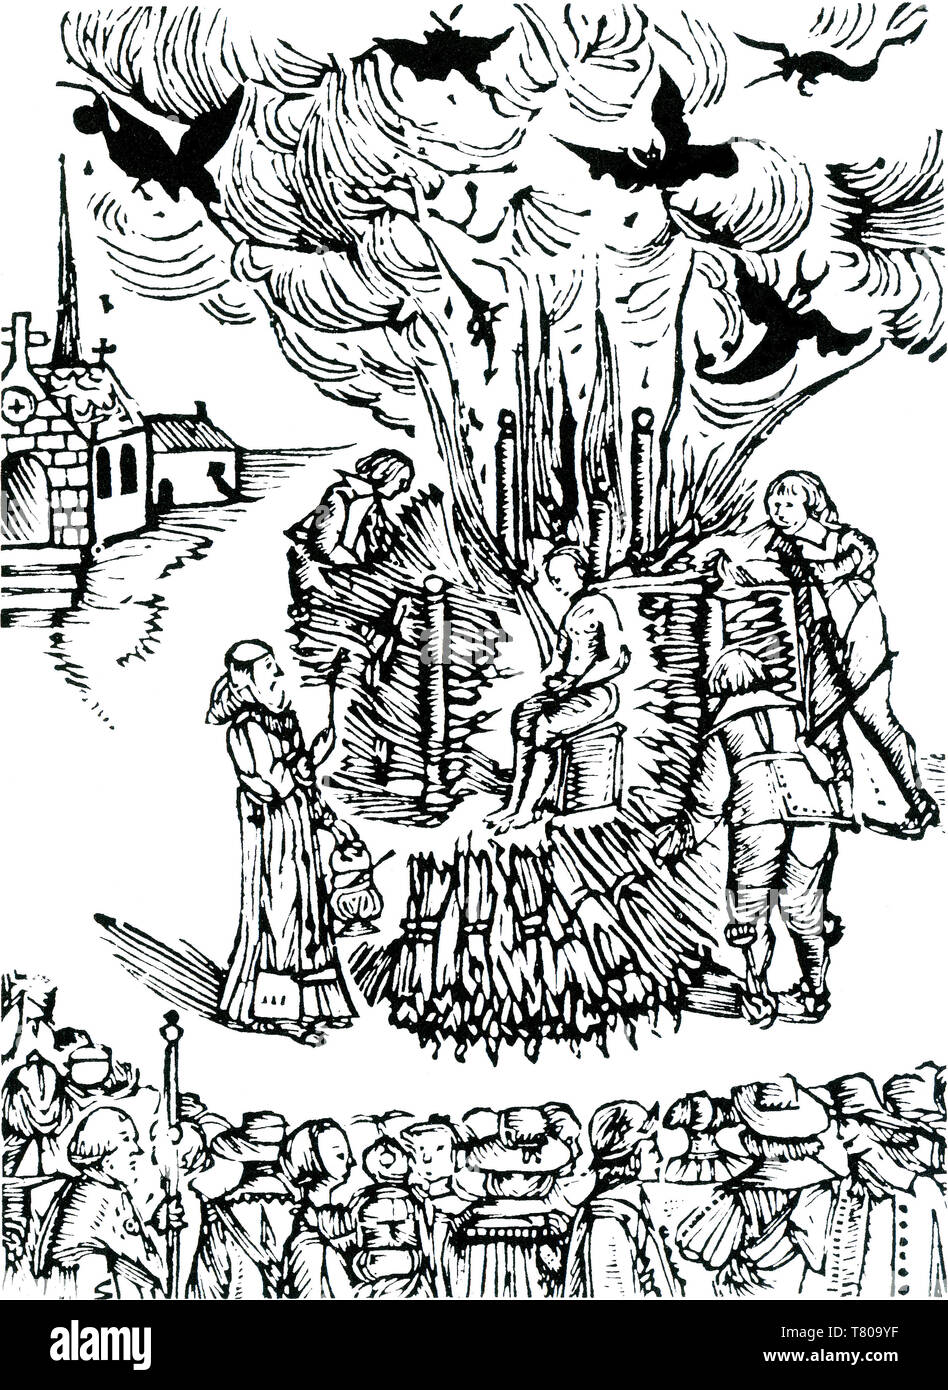 Urbain Grandier Burned at Stake, 1634 Stock Photo